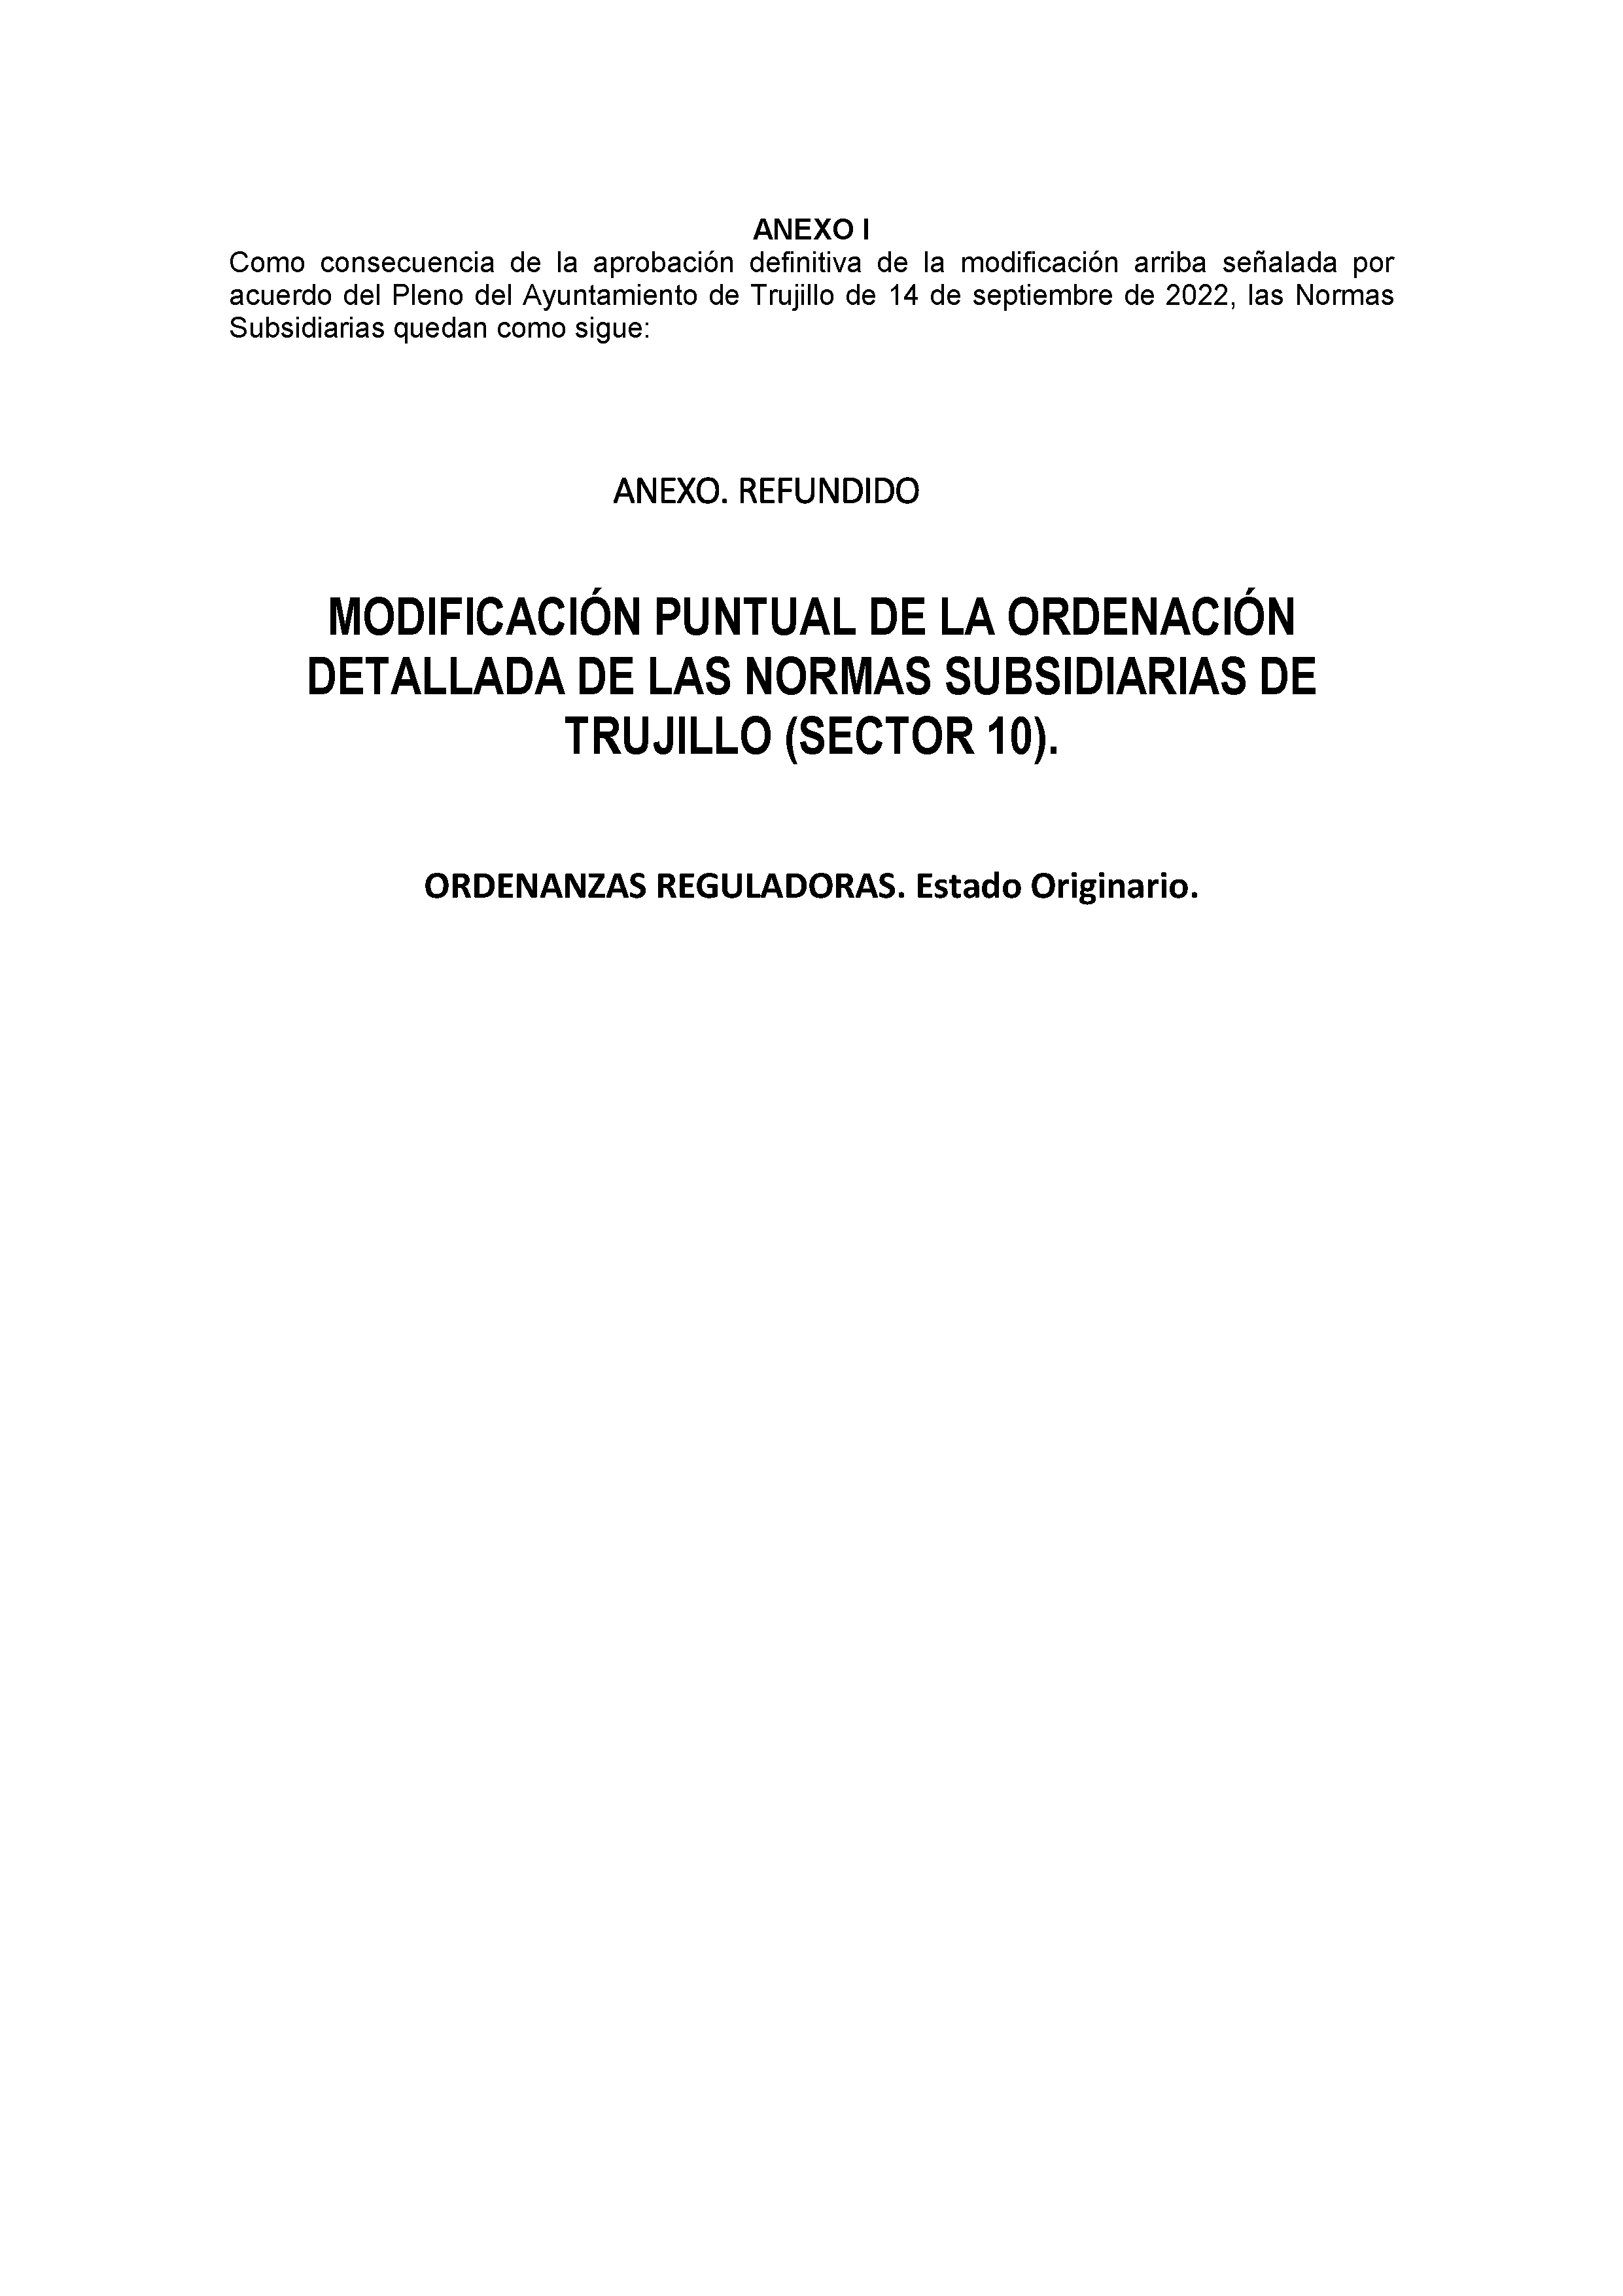 ANEXO - MODIFICACIÓN PUNTUAL DE LA ORDENACIÓN DETALLADA DE LAS NORMAS SUBSIDIARIAS DE TRUJILLO (SECTOR 10) Pag 1